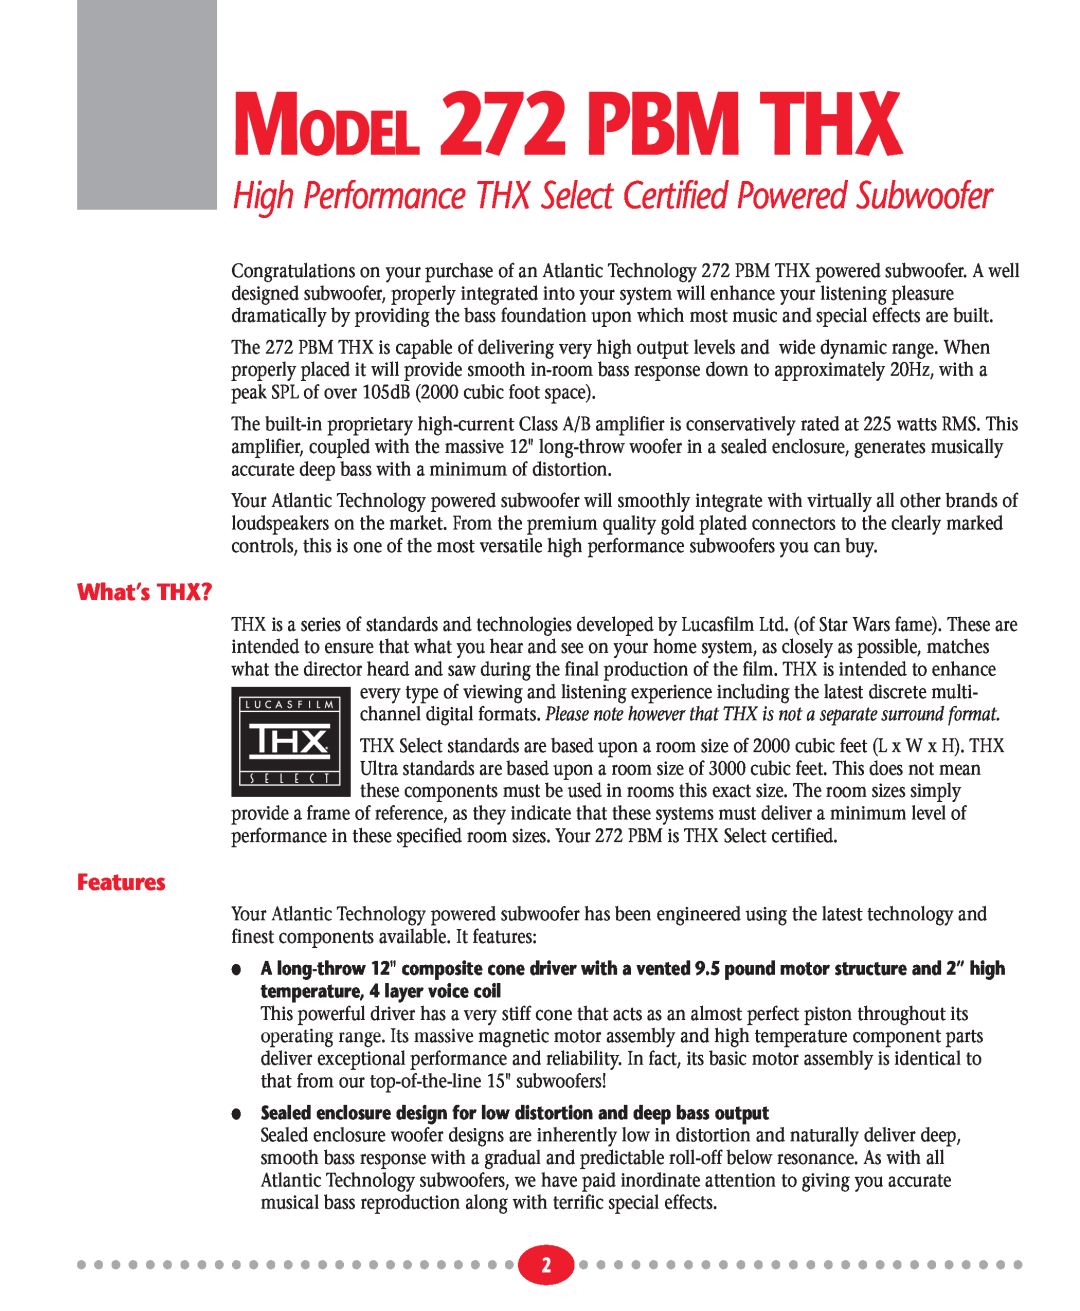 Atlantic Technology instruction manual What’s THX?, Features, MODEL 272 PBM THX 